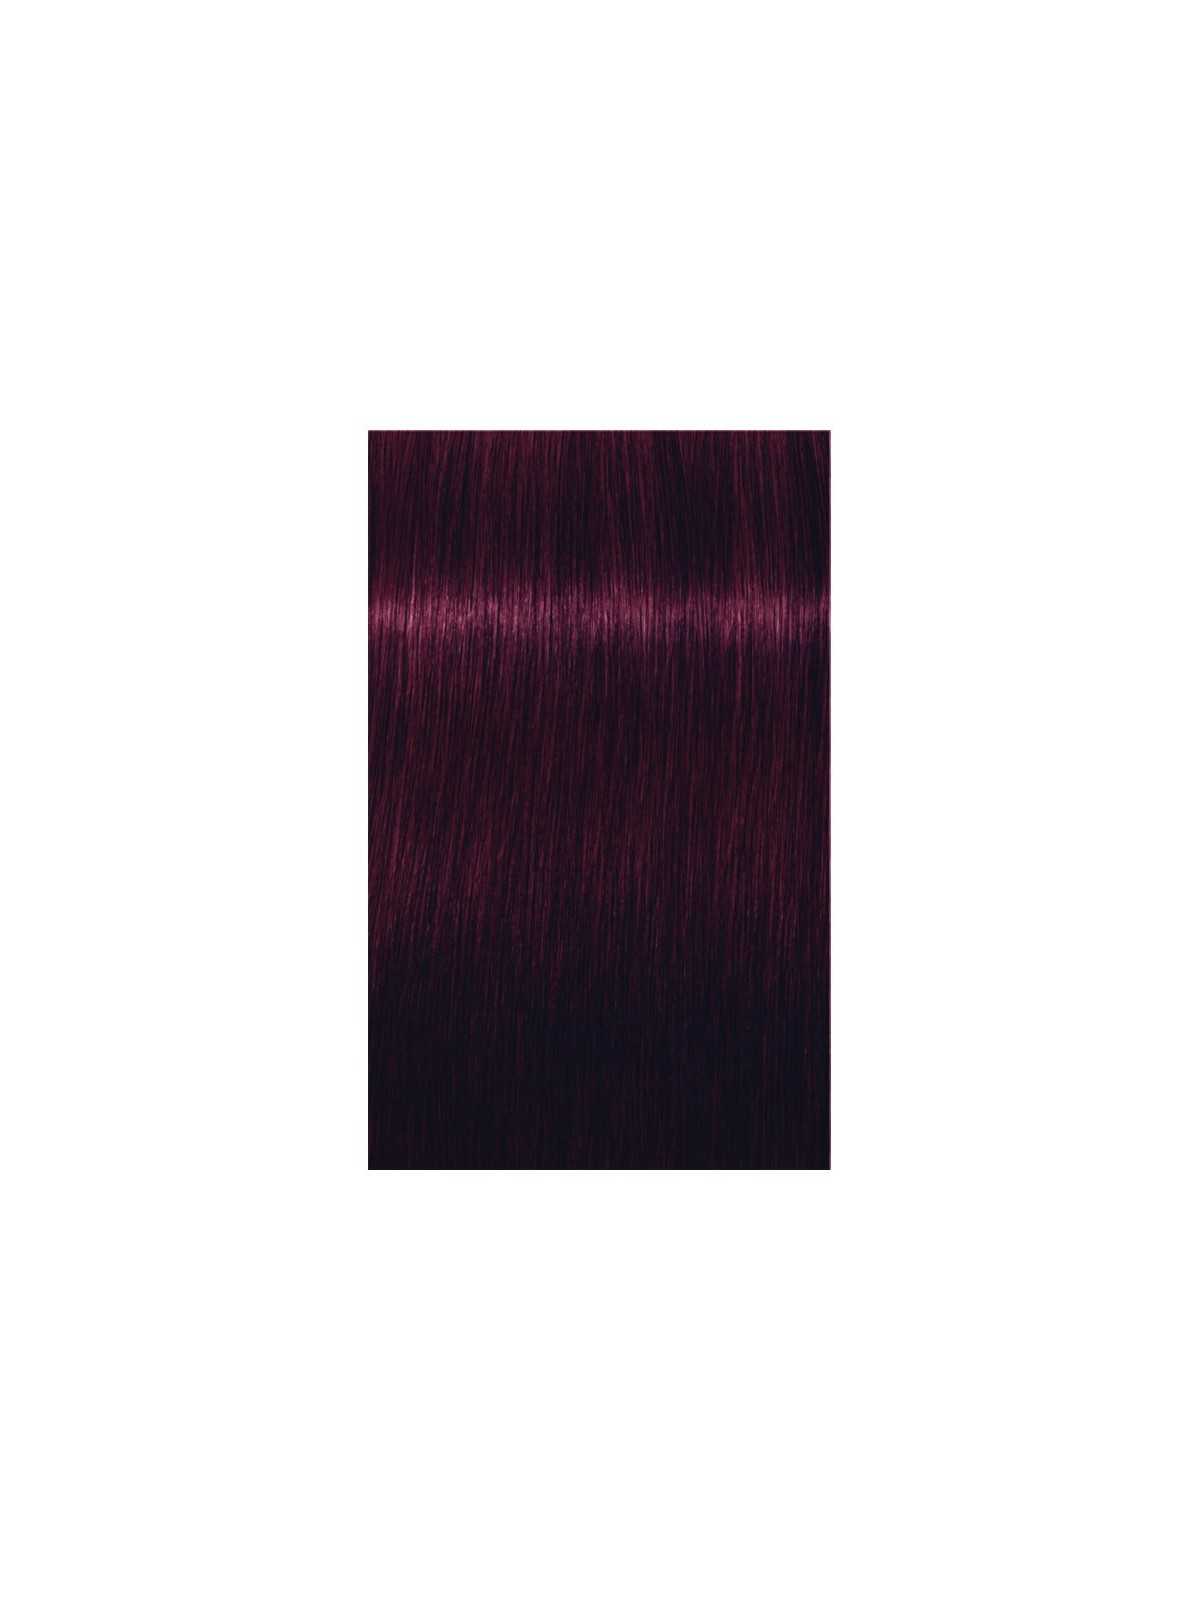 Comprar Schwarzkopf Tinte Permanente IGORA ROYAL 60ml. Nº 5-99 Castaño claro violeta intenso en Tintes con amoniaco por sólo 13,82 € o un precio específico de 8,29 € en Thalie Care